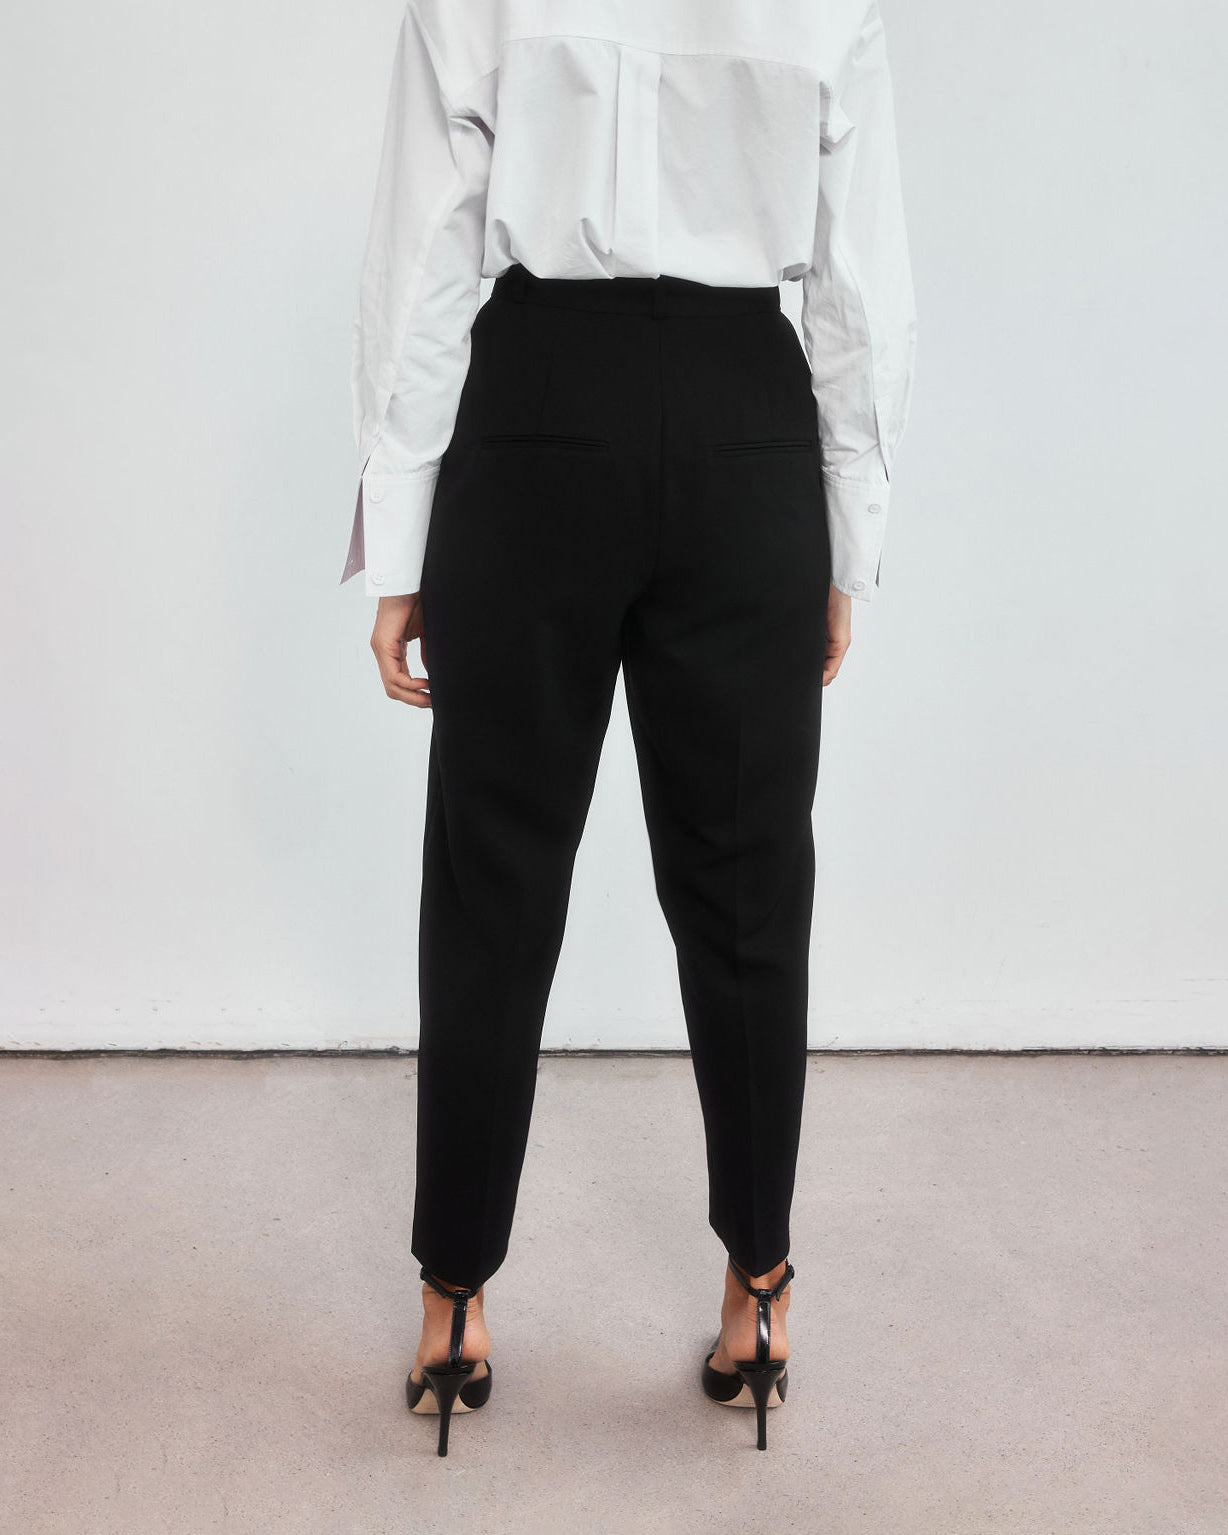 YMC - Black Creole Peg Trousers | Peg trousers, Peg pants, Black pants  casual